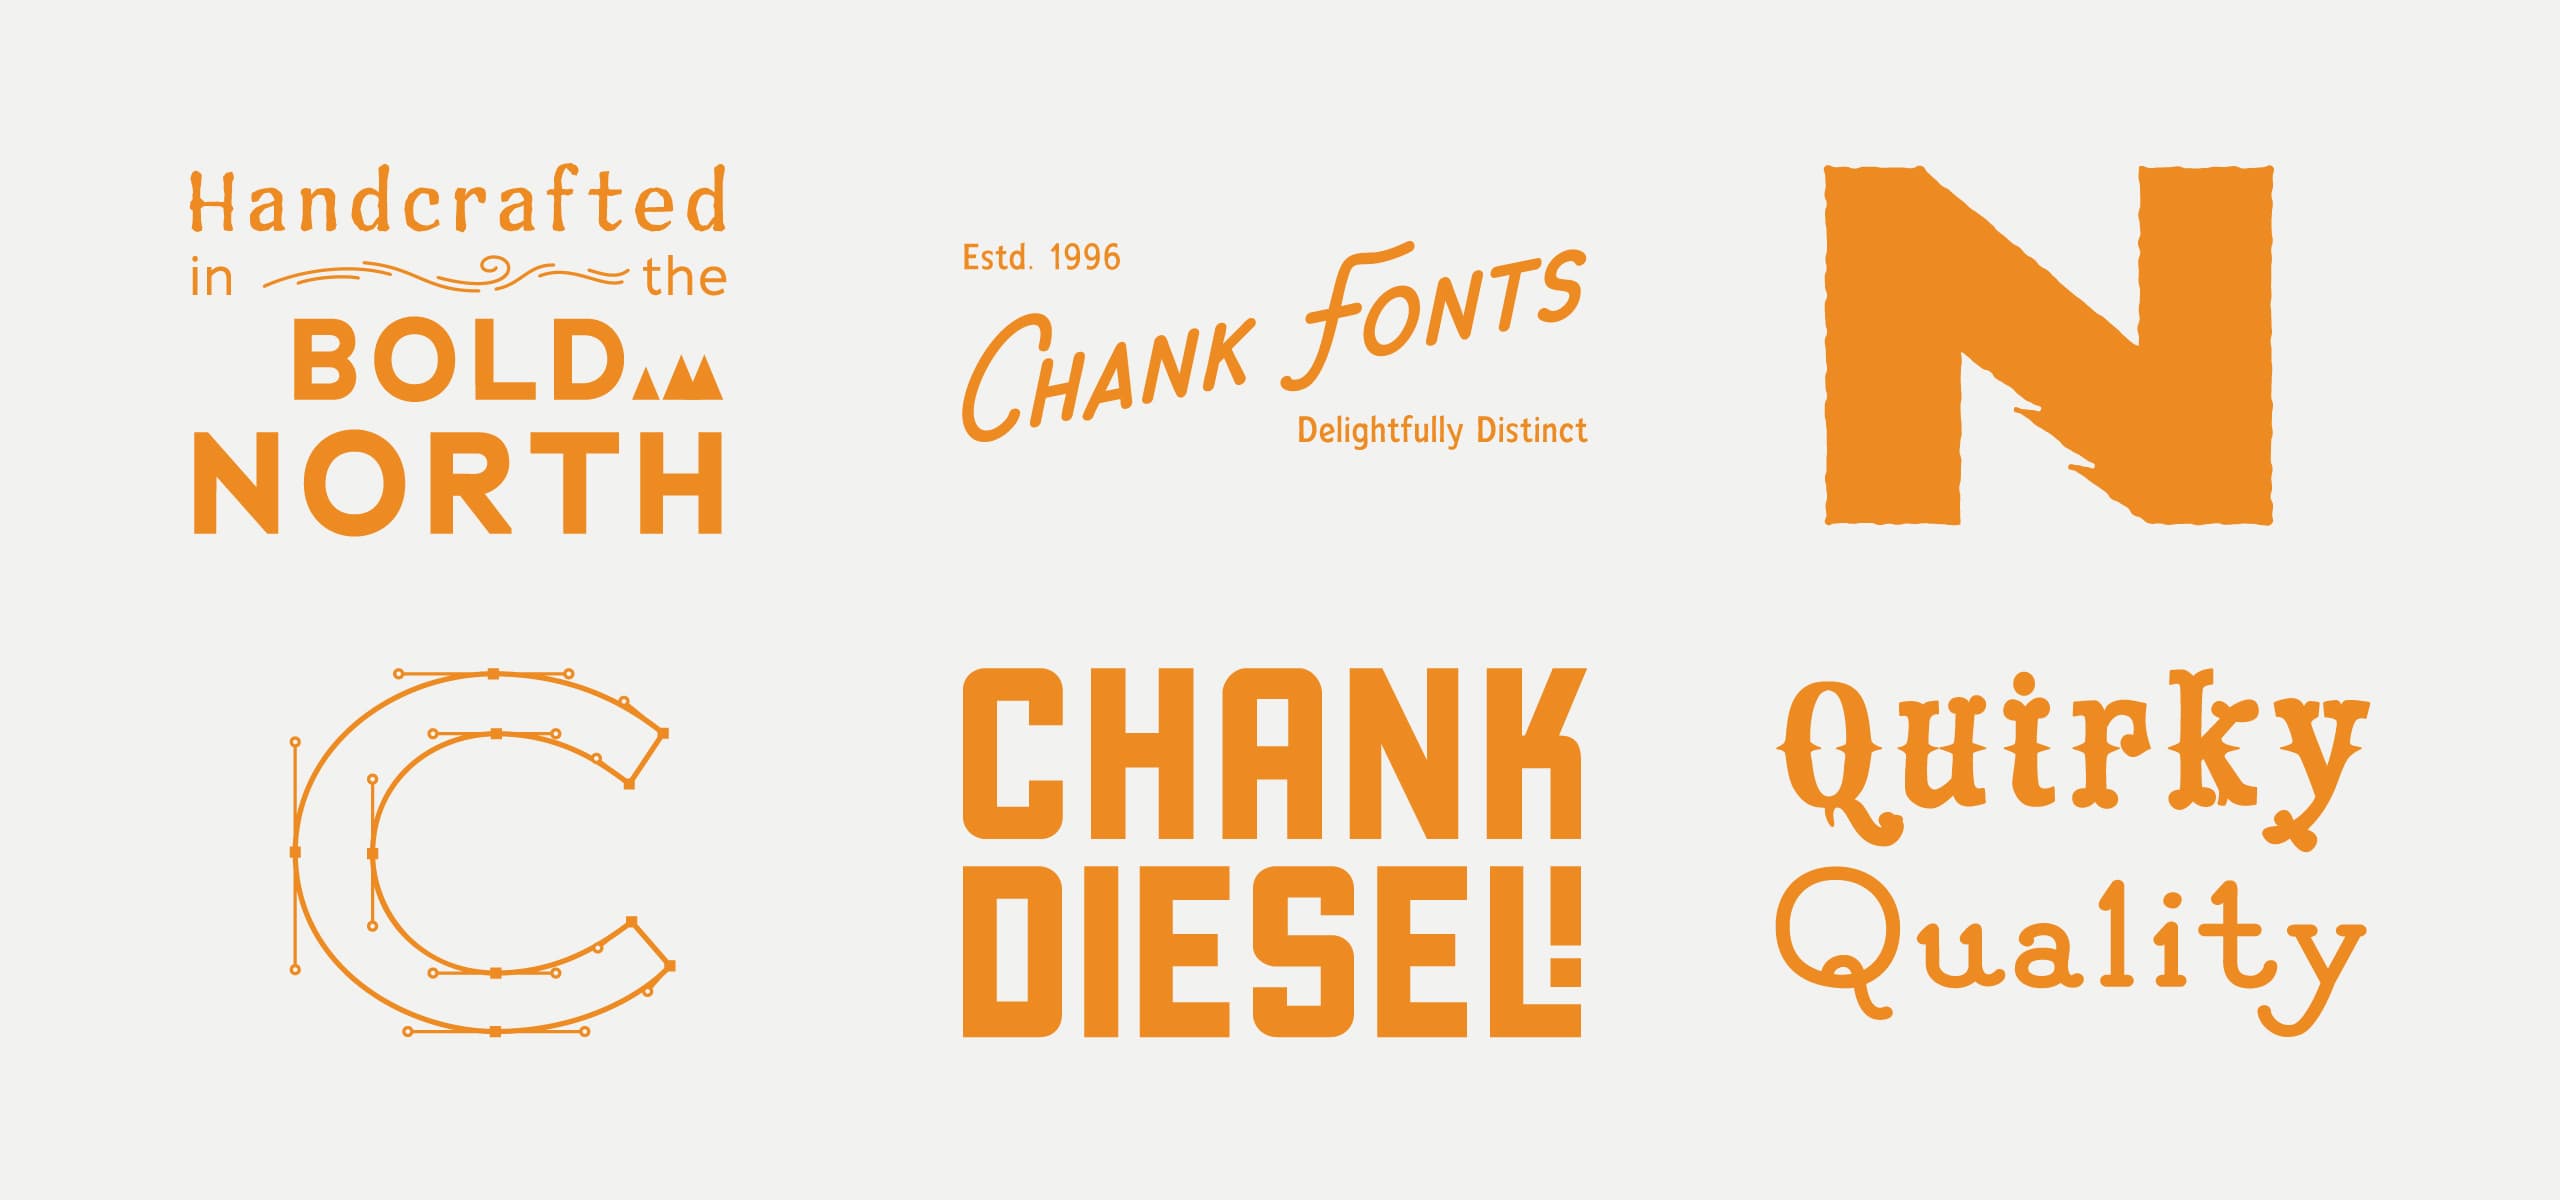 Type specimens of Chank Diesel's work.